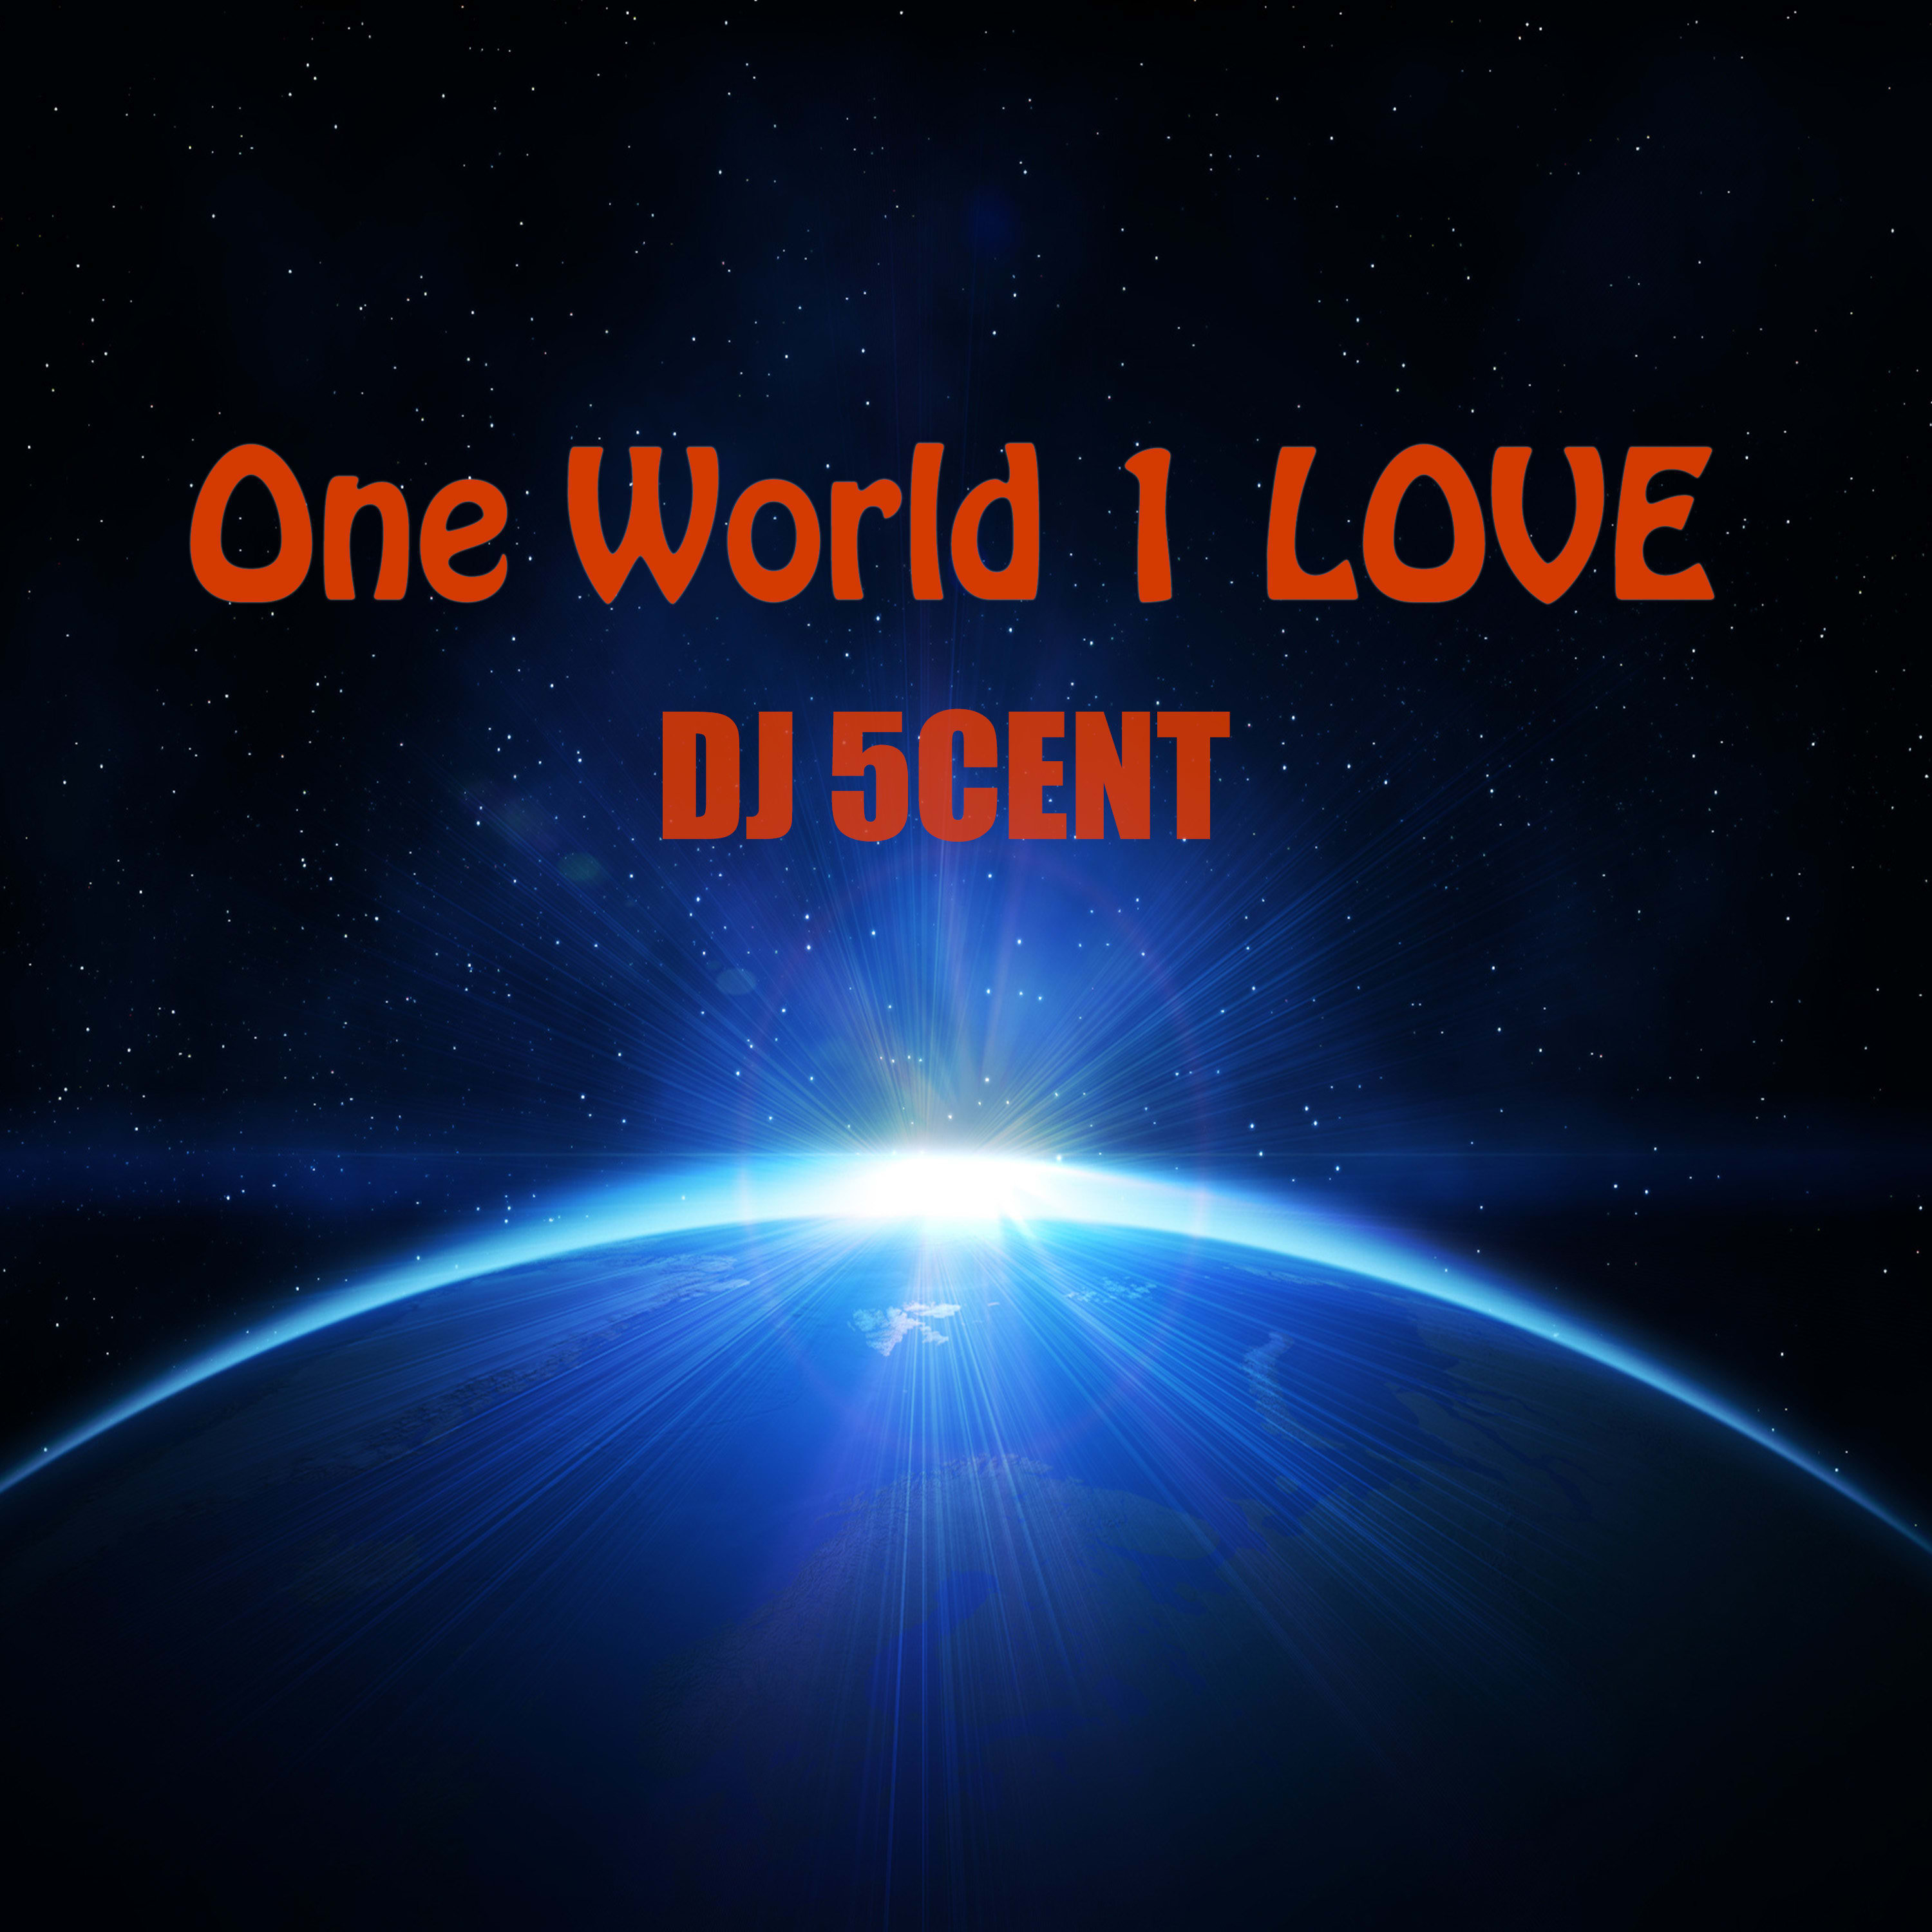 One World 1 Love "feat" DJ 5CENT